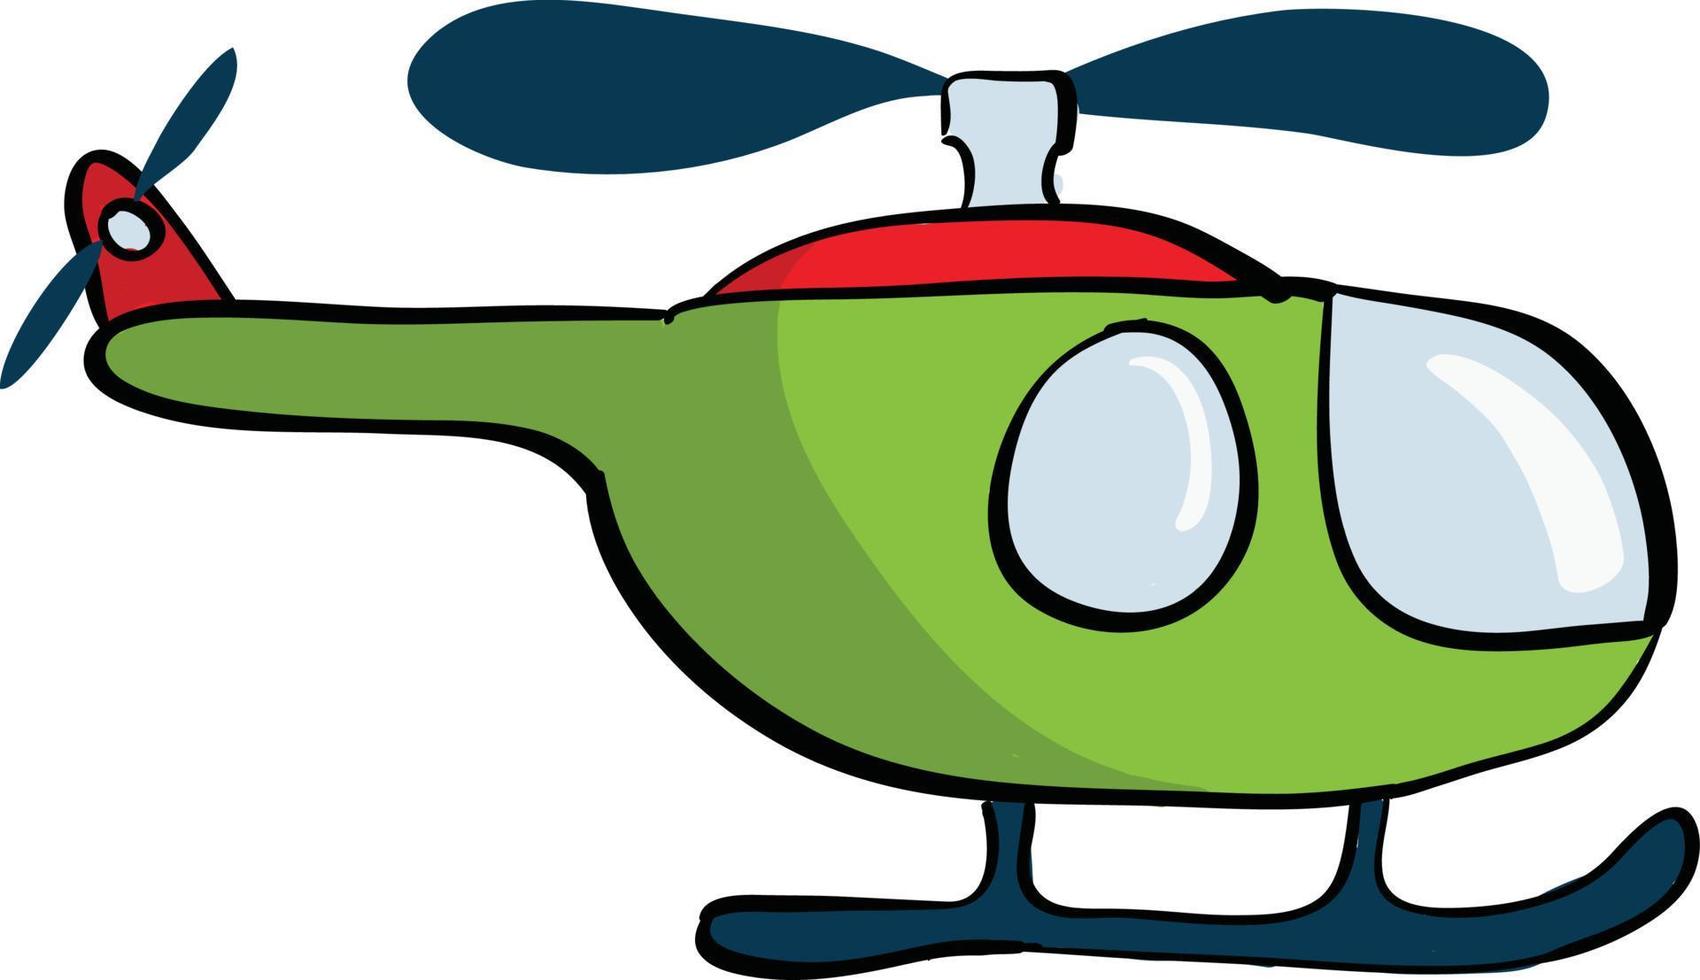 grön helikopter, illustration, vektor på vit bakgrund.